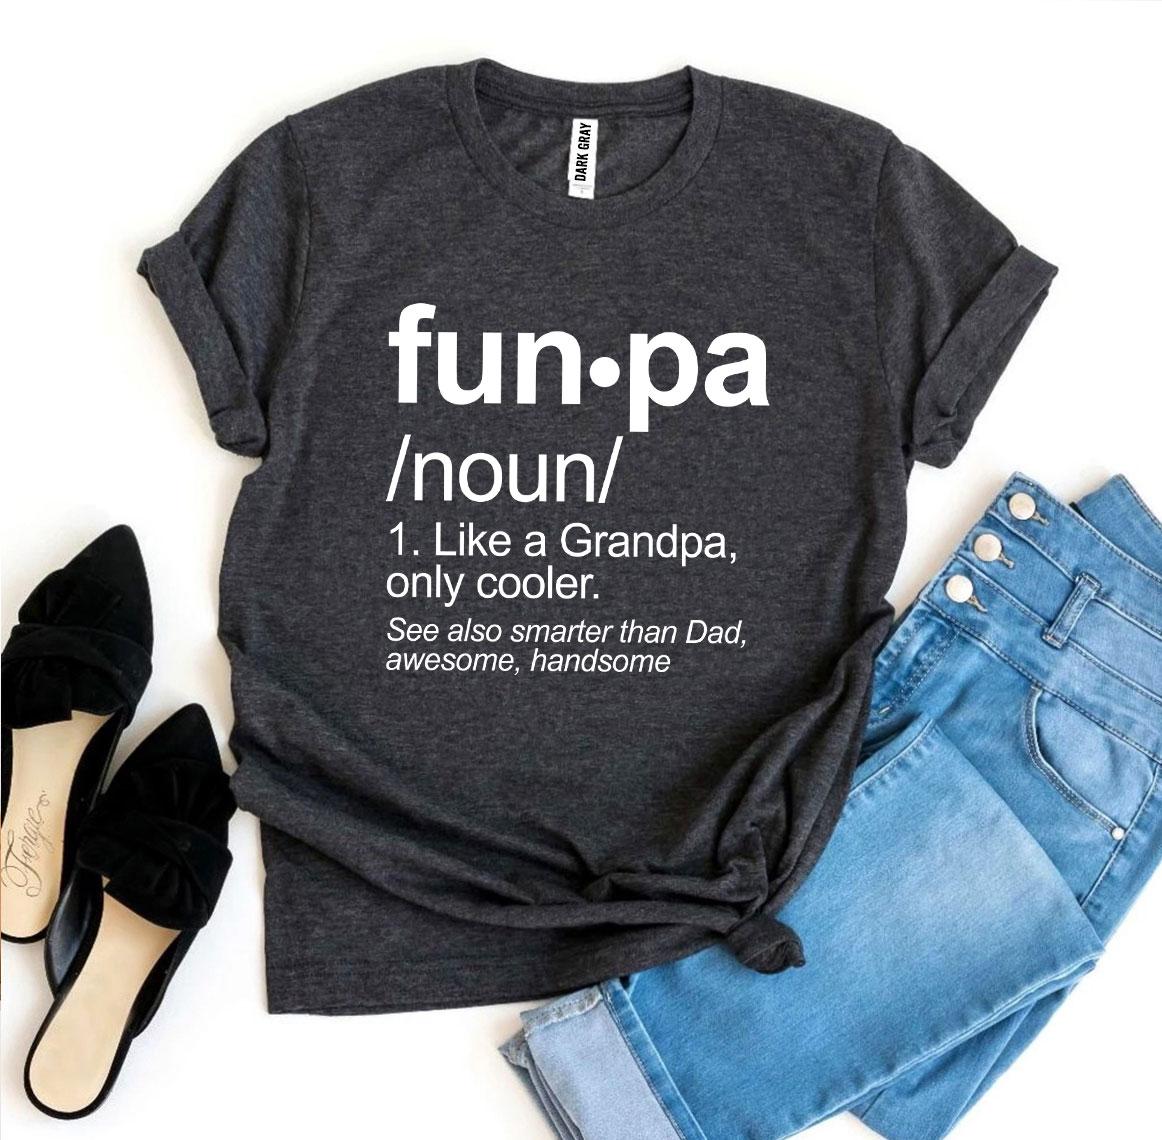 Nfin8 Grand Charm - 'Funpa' Premium Soft Feel T-Shirt